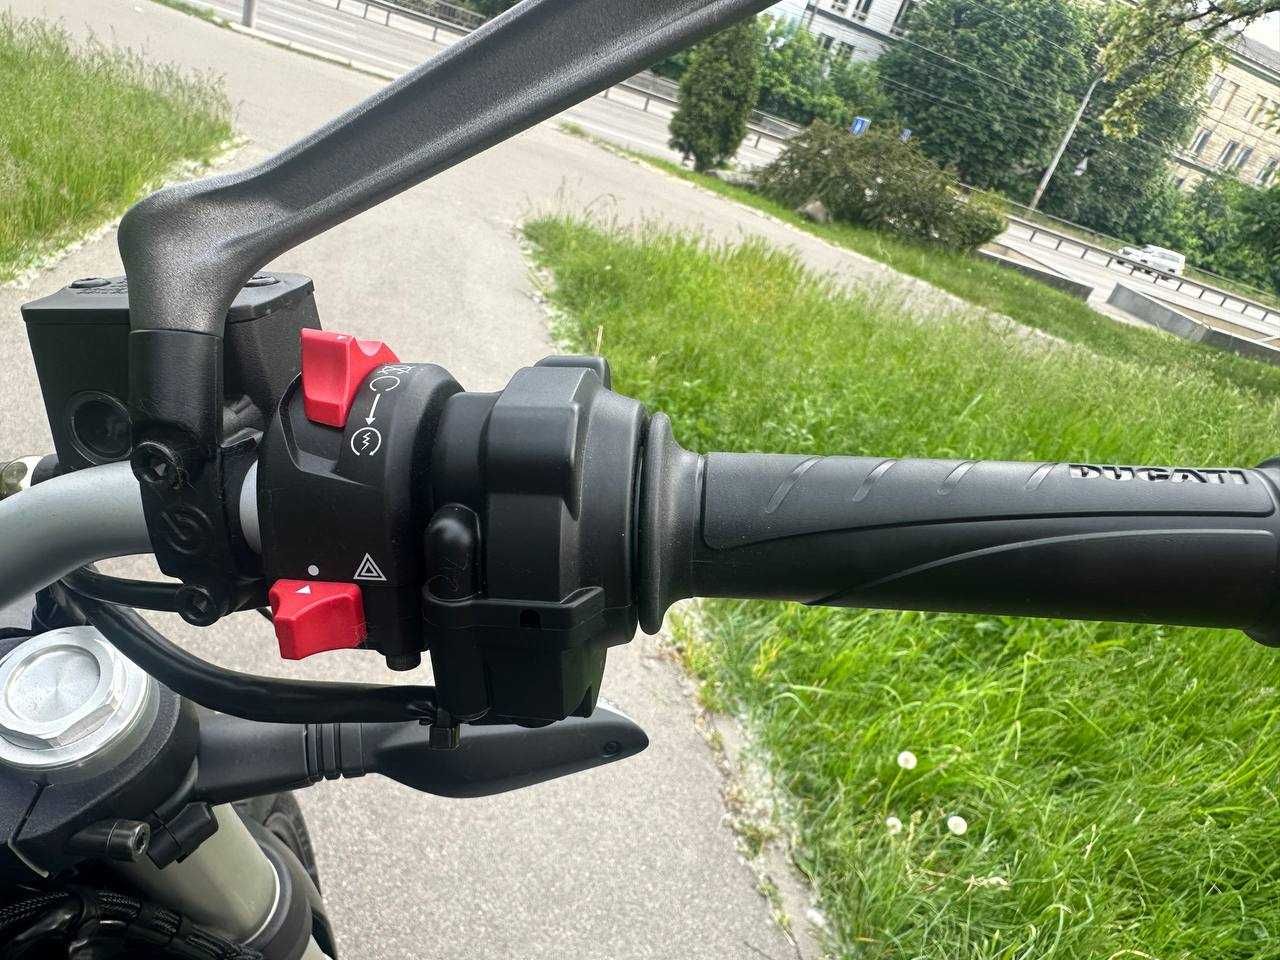 Мотоцикл Ducati Monster 821 2019 рік 3442 км